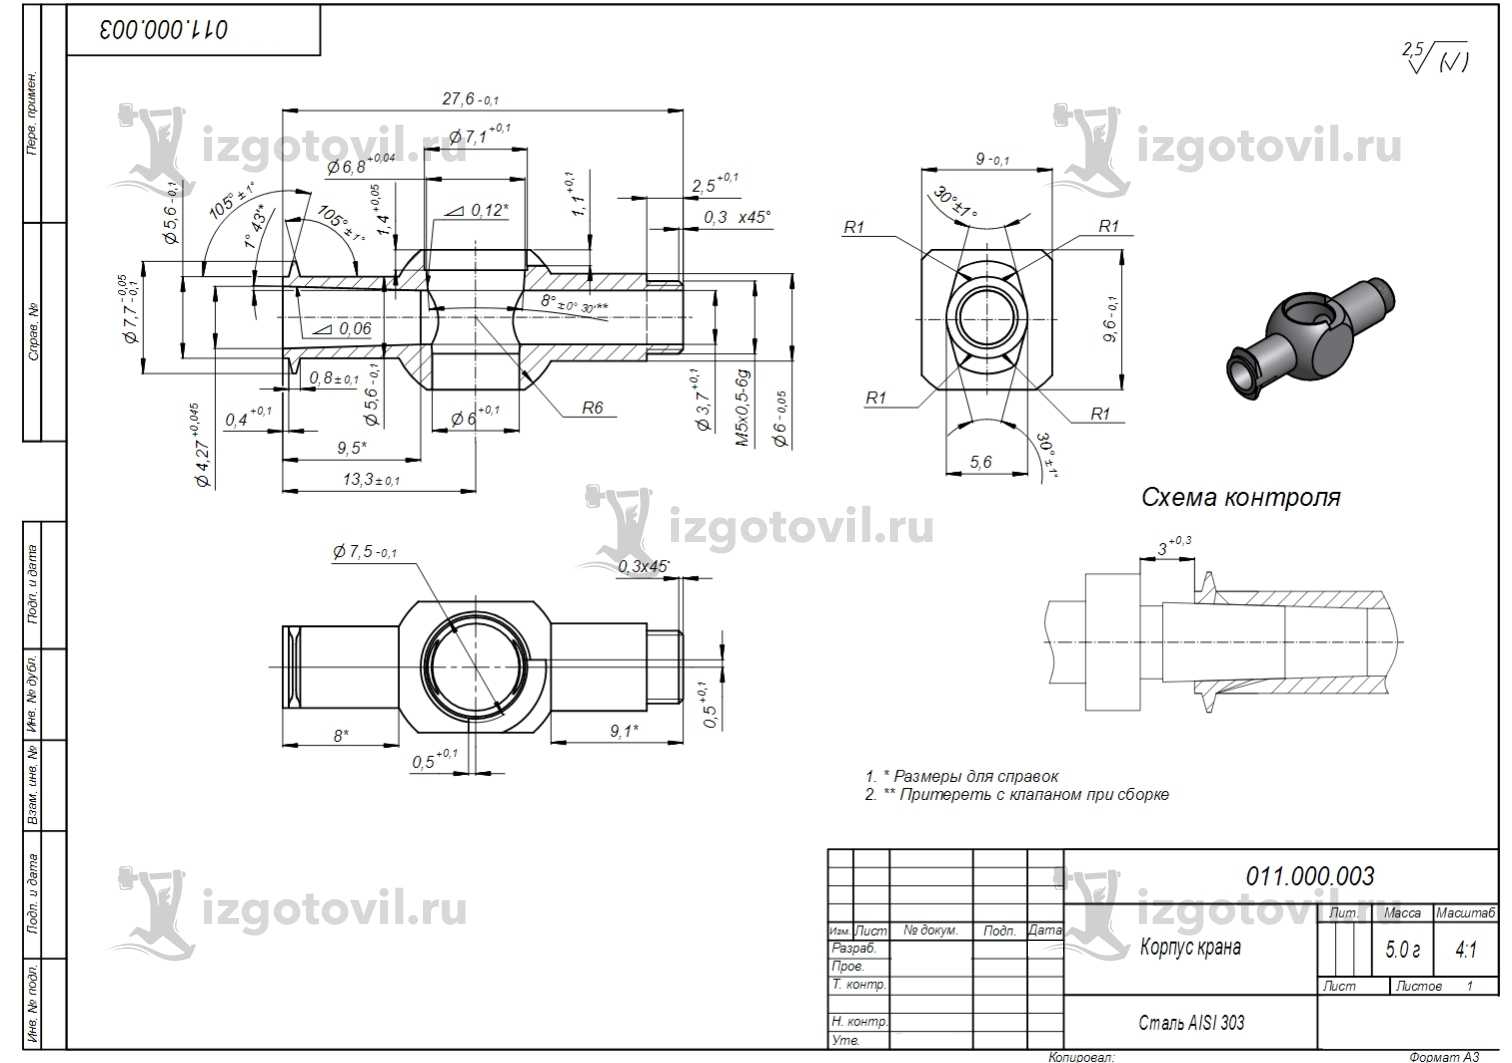 Токарно-фрезерная обработка: изготовление корпусов, клапана крана и втулки коннектора.